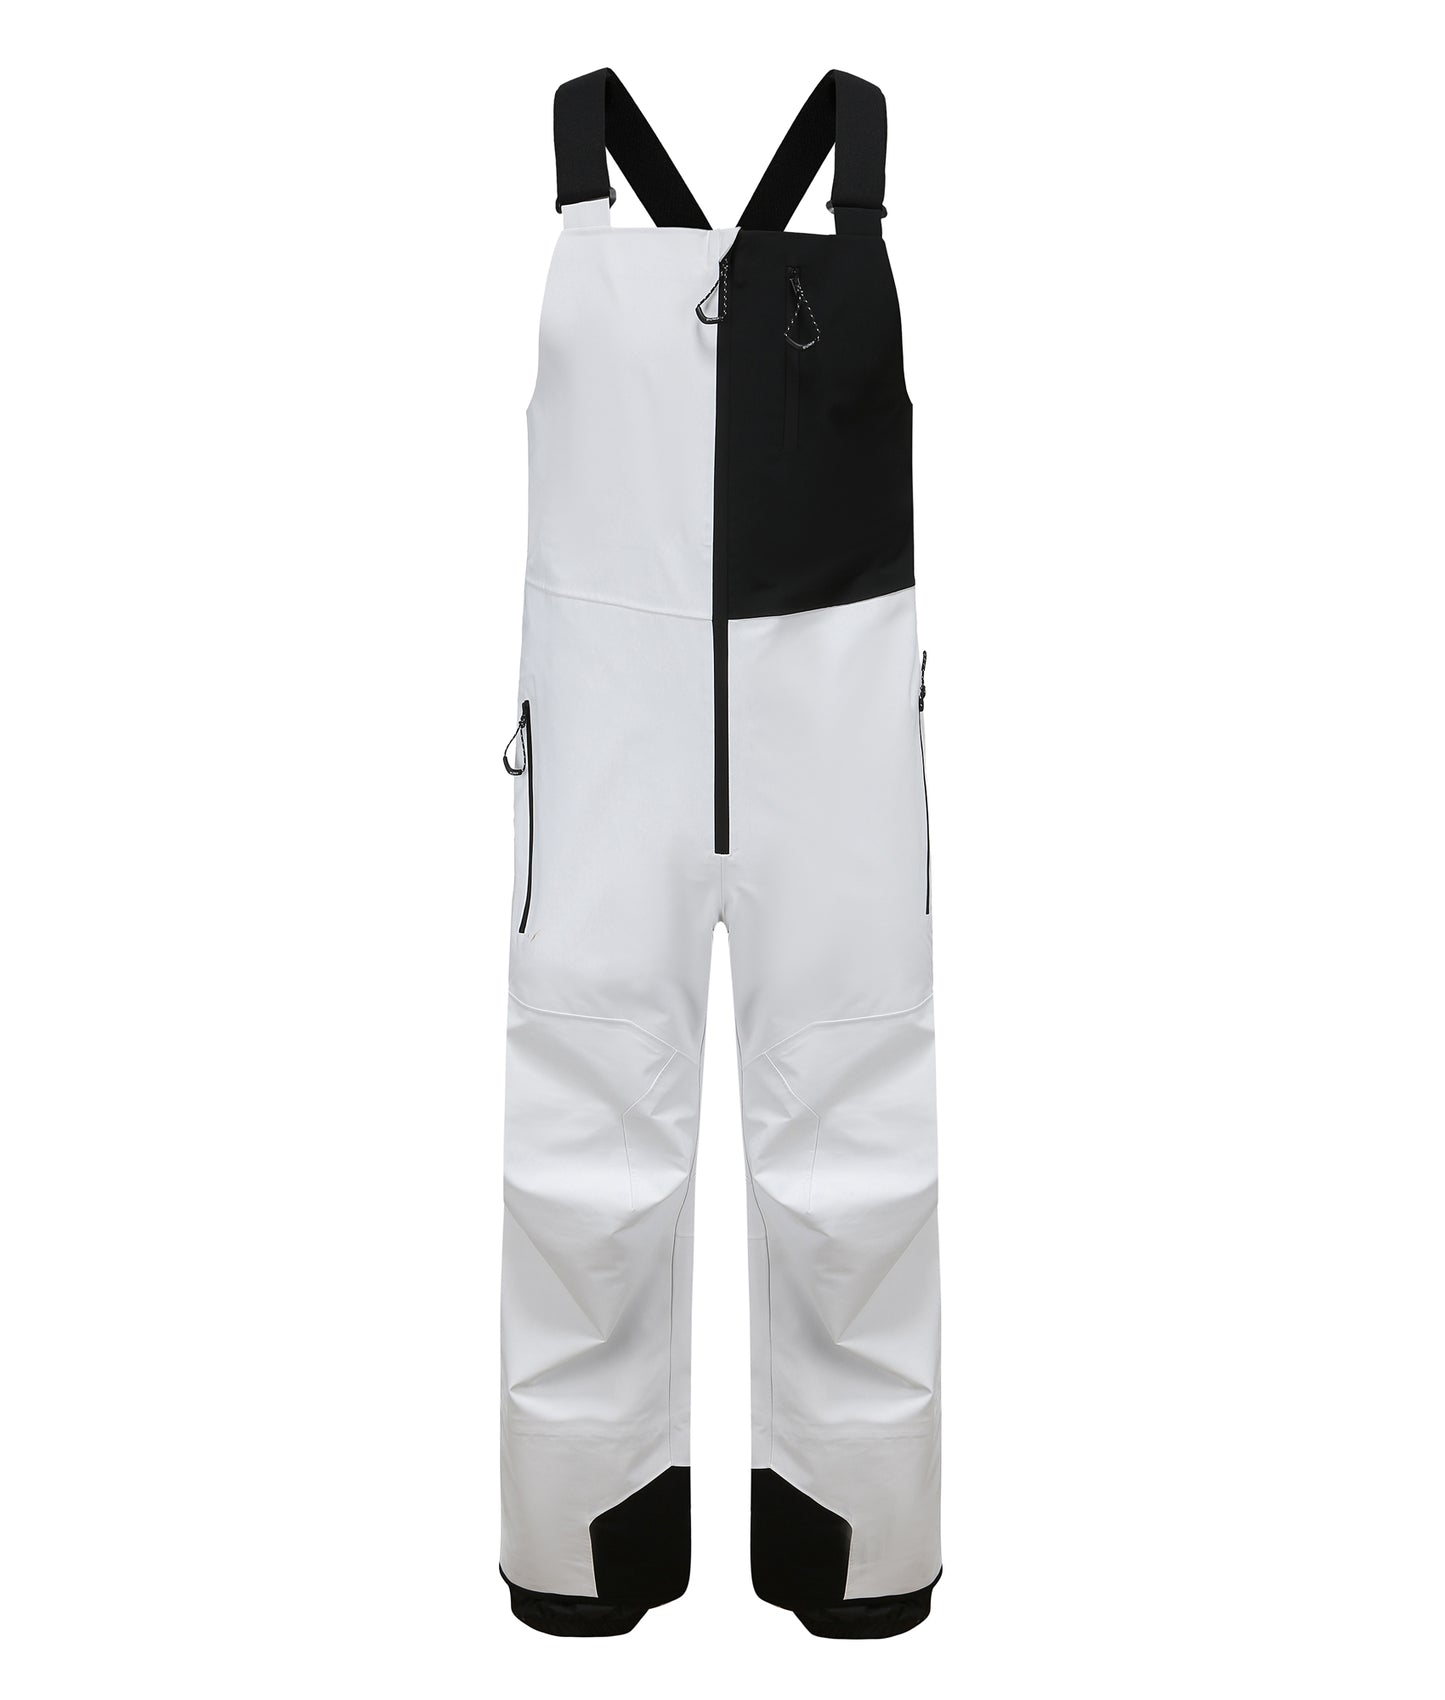 BUMP 23 3L RG Snowboard/Ski Bib Pants Men Naval Academy